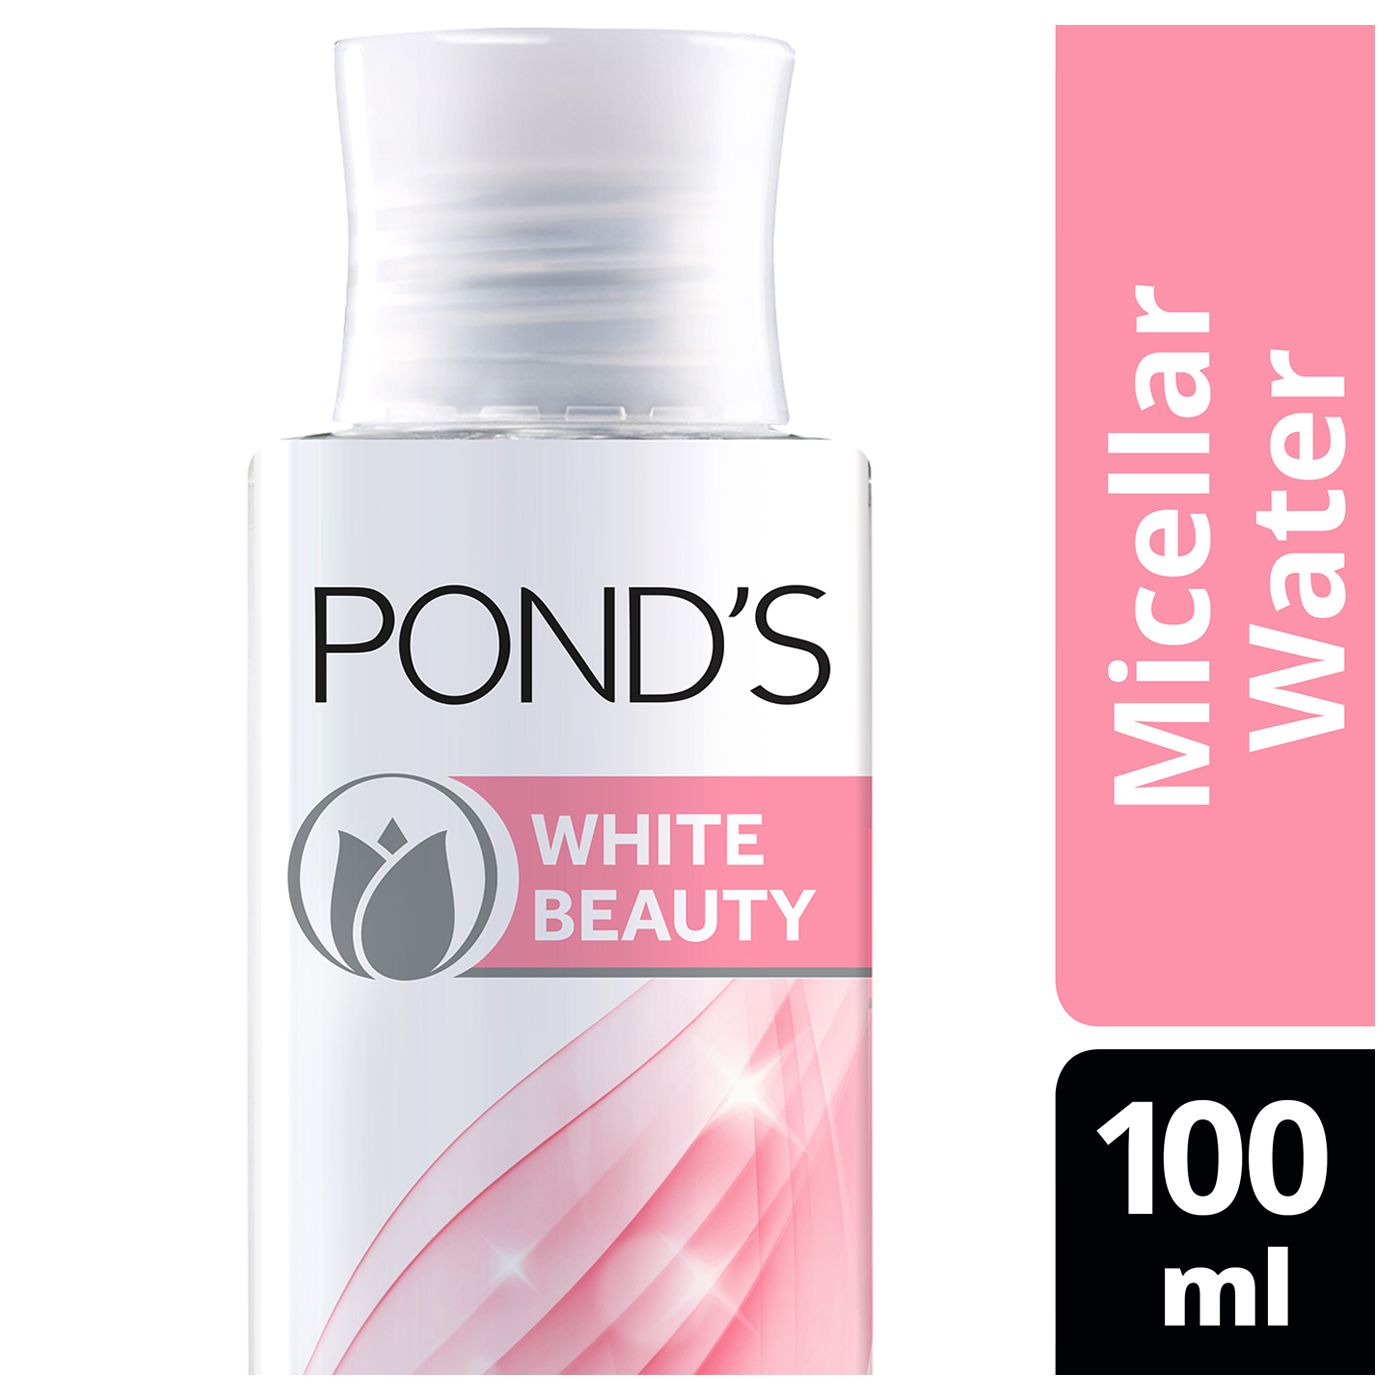 Pondâ€™S White Beauty Brightening Micellar Water 100ml - 2